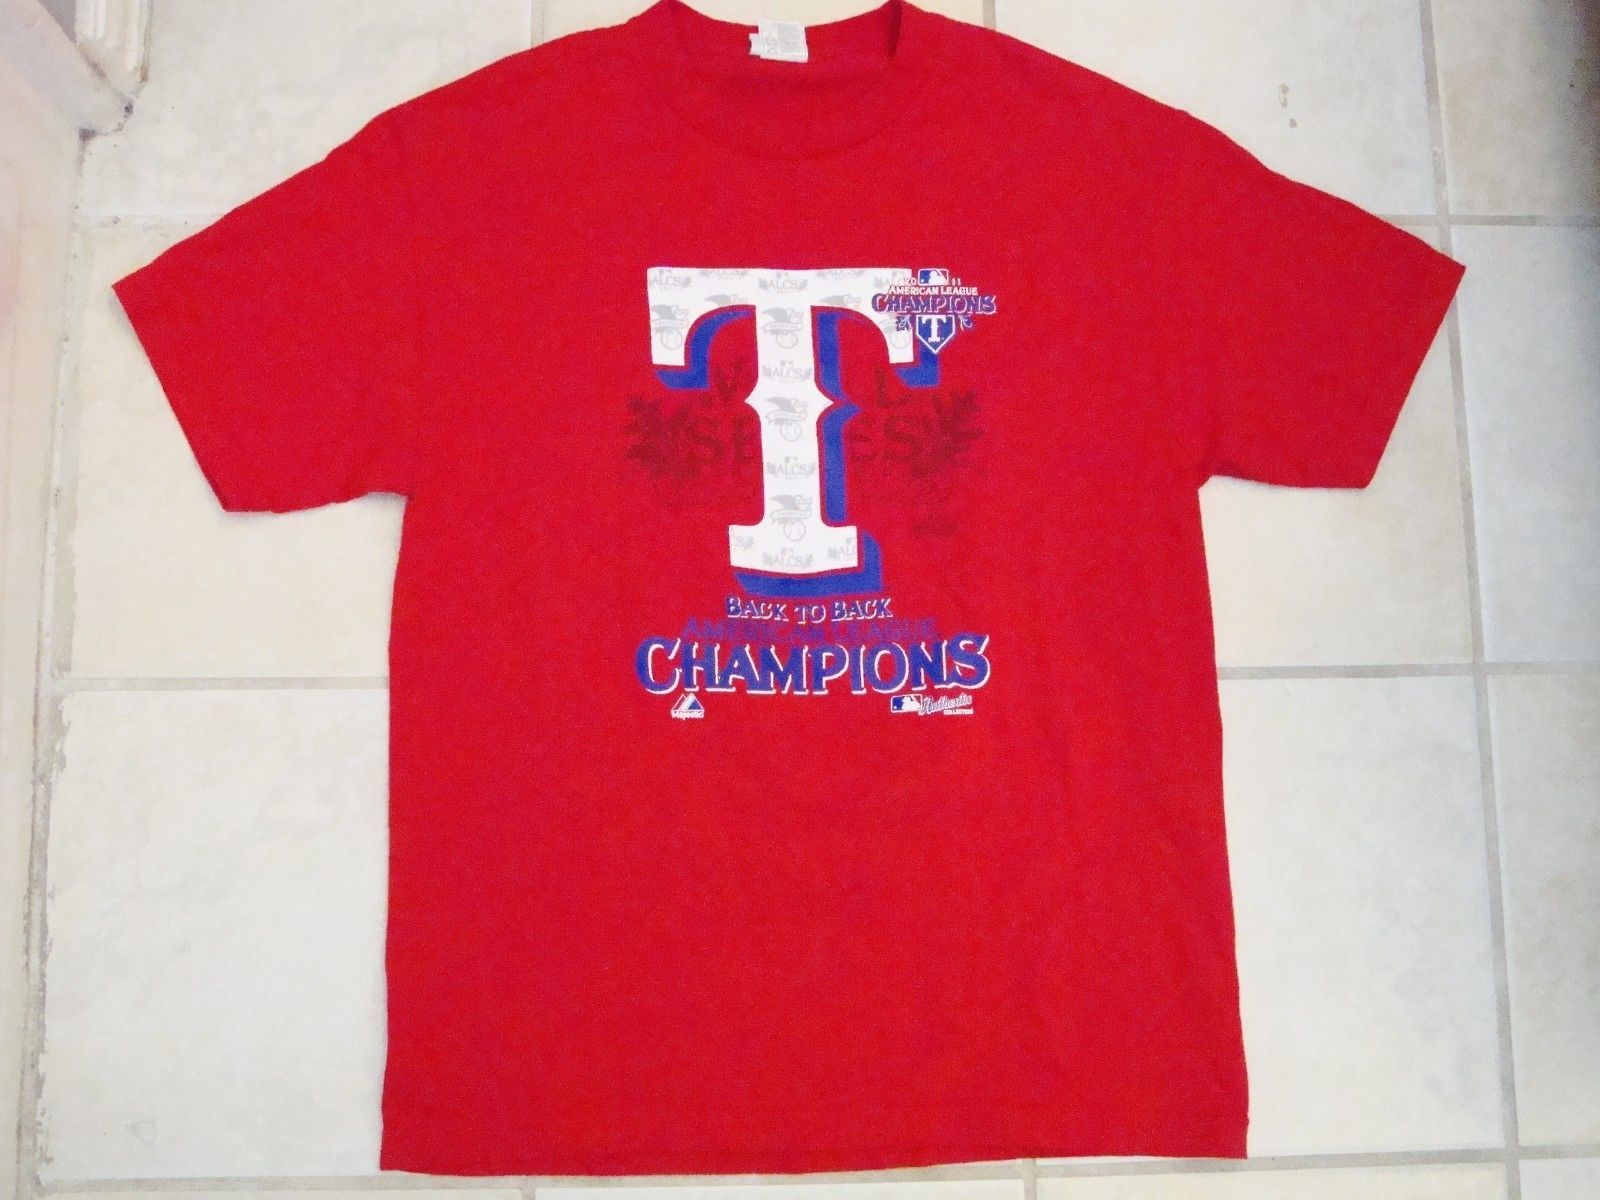 texas rangers championship shirt